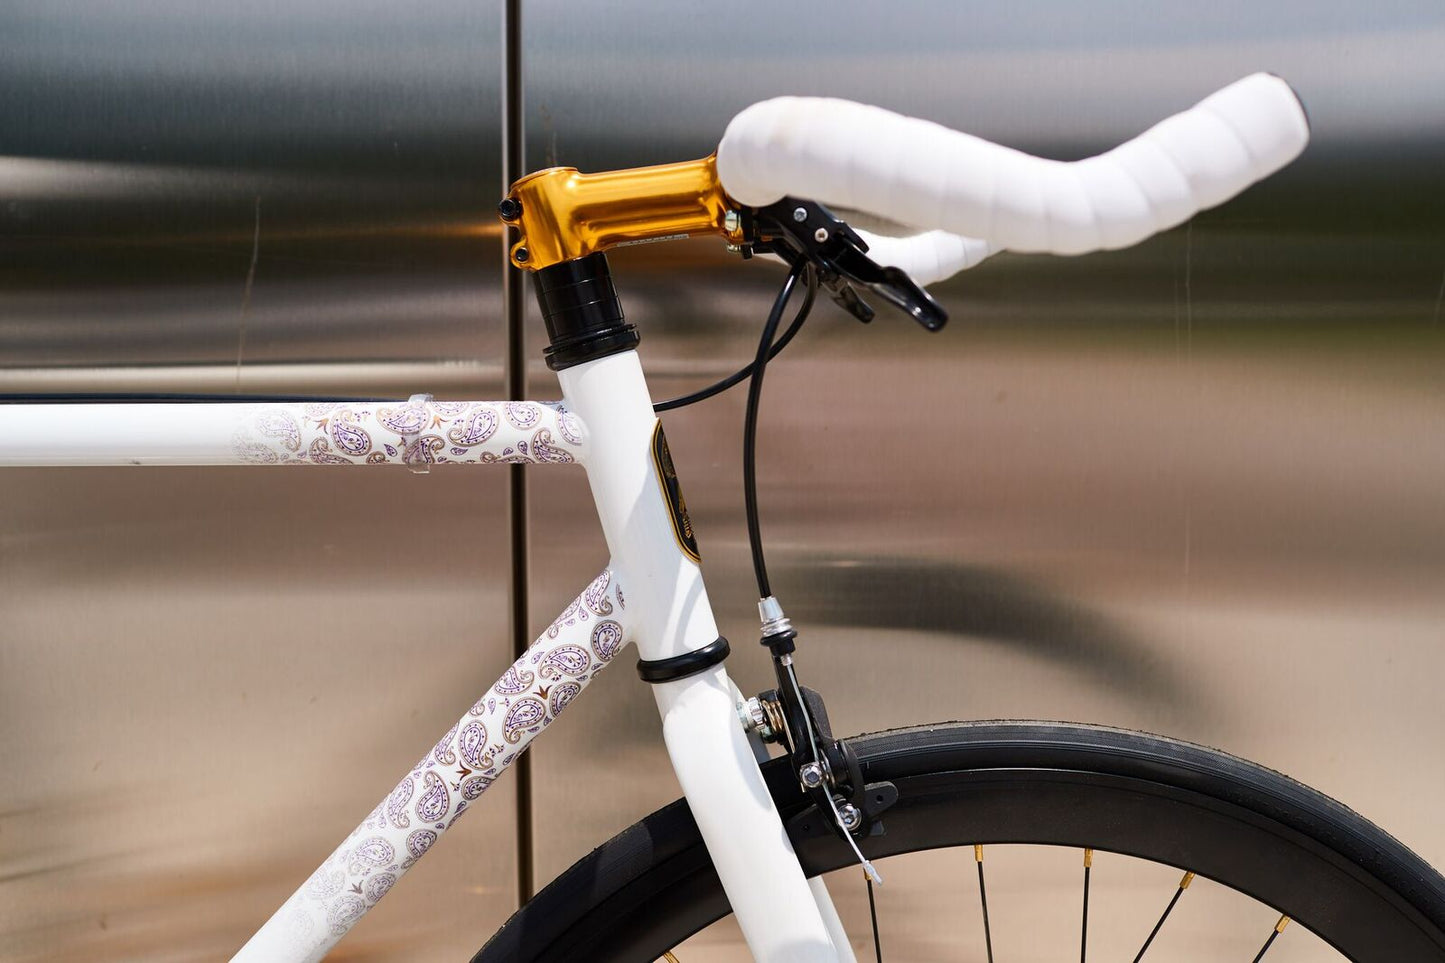 The White Lotus - A Studiiyo23 x State Bicycle Co. Collab